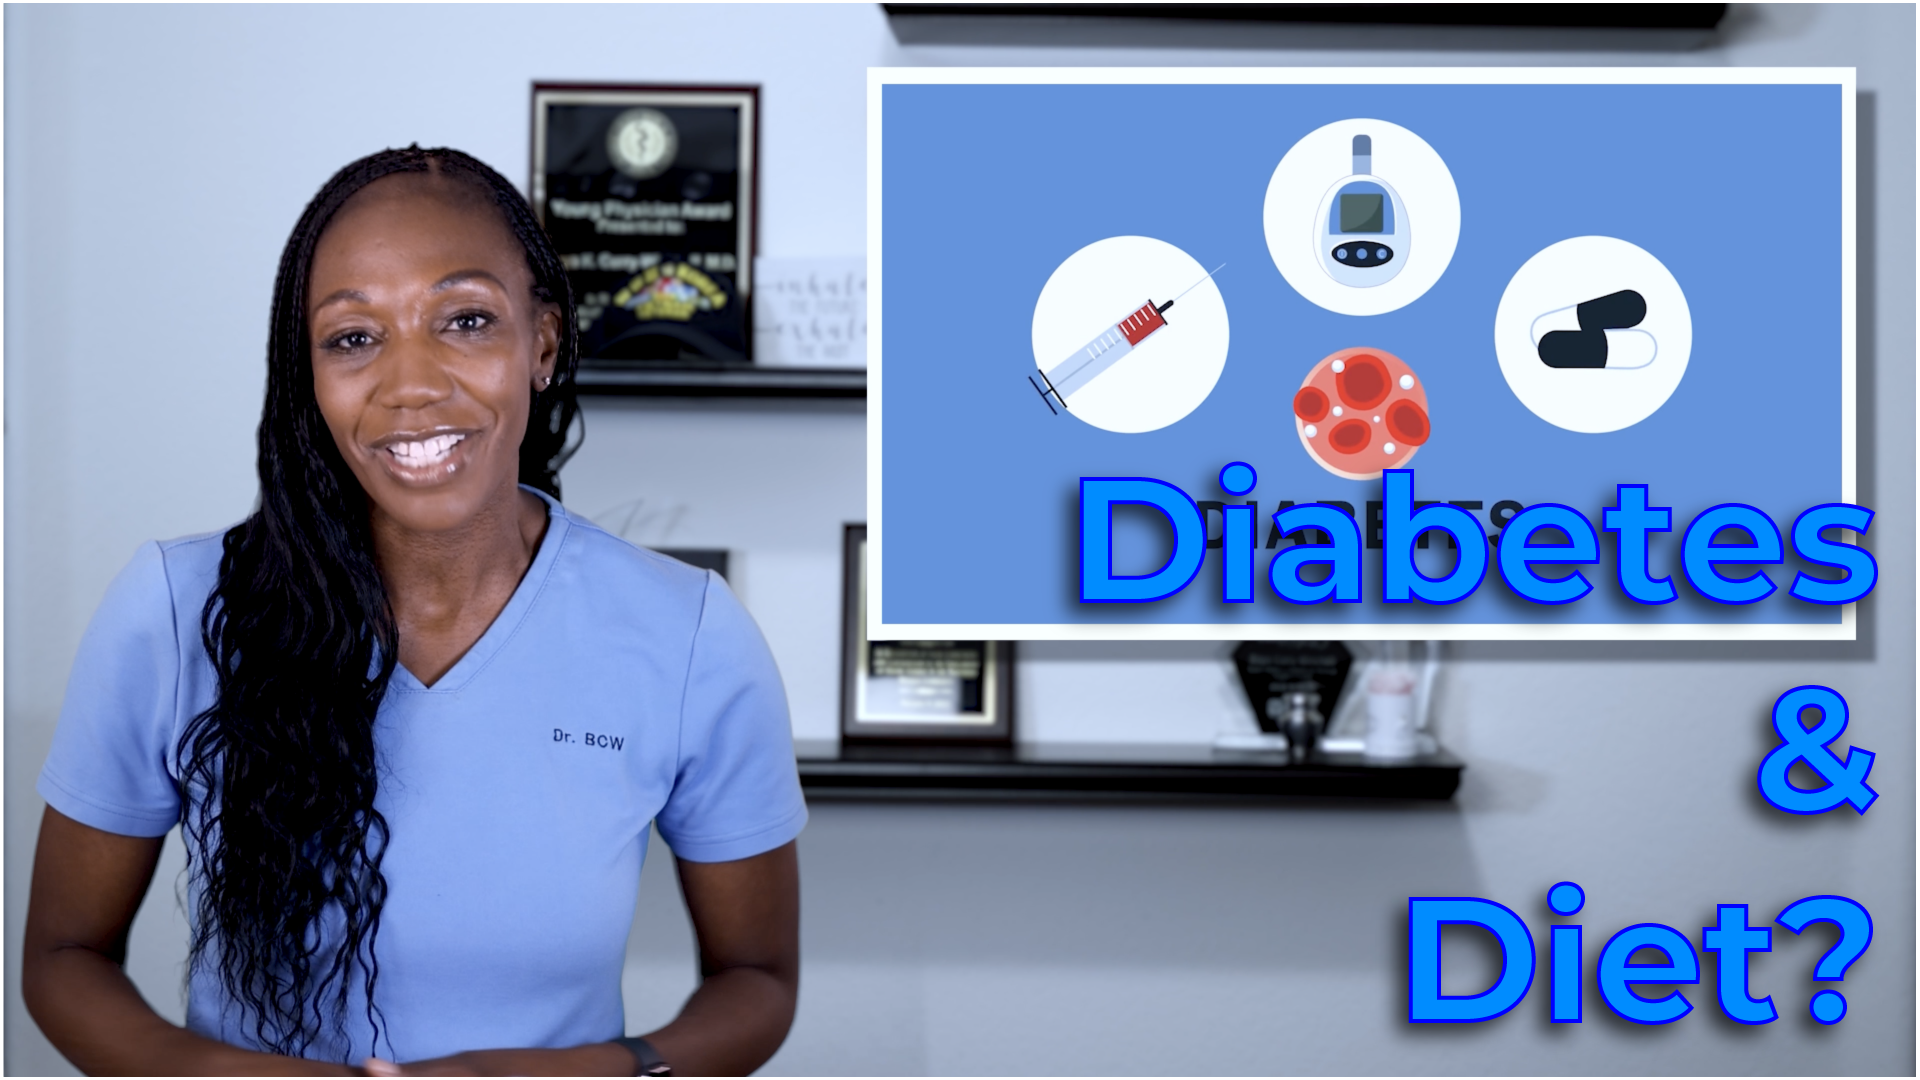 Diabetes and Diet?